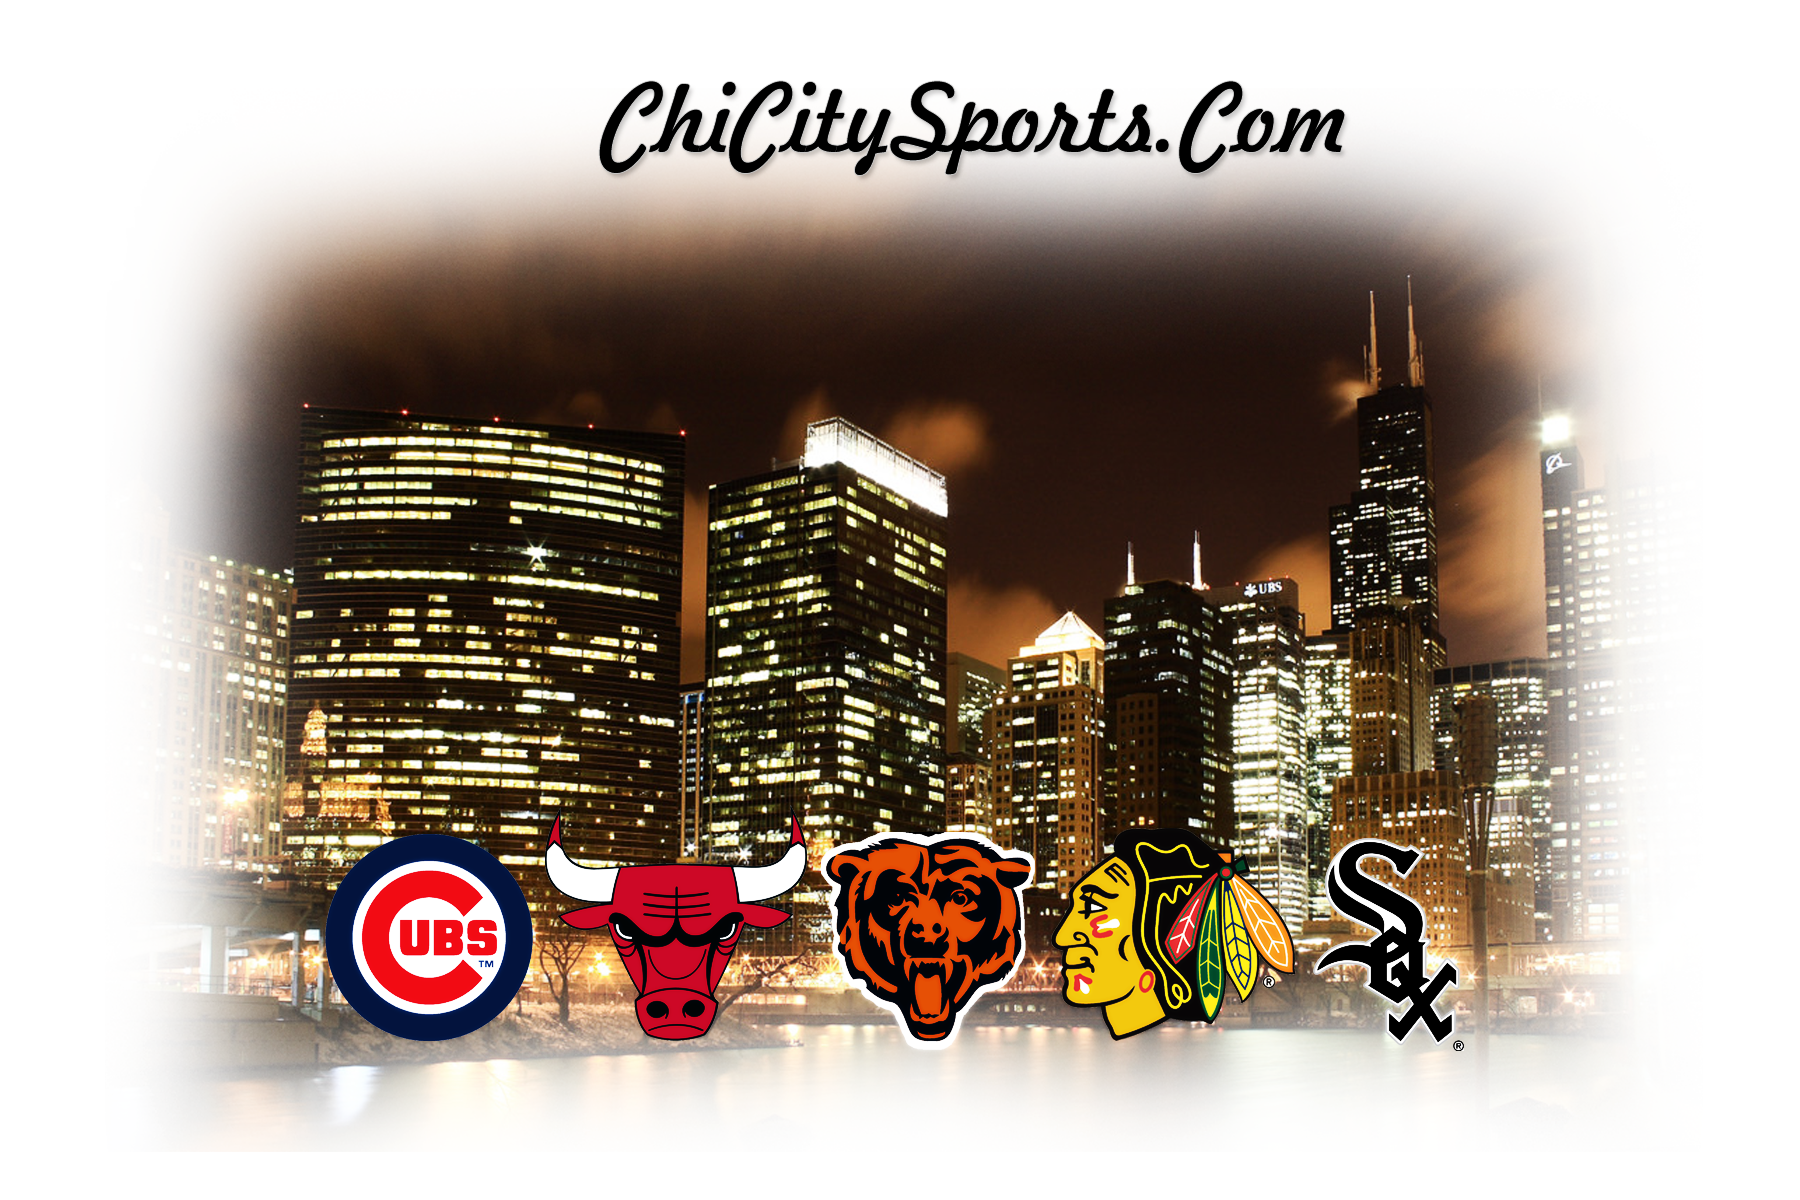 Wallpaper New Logo Chicitysports Chicago Sports Forum